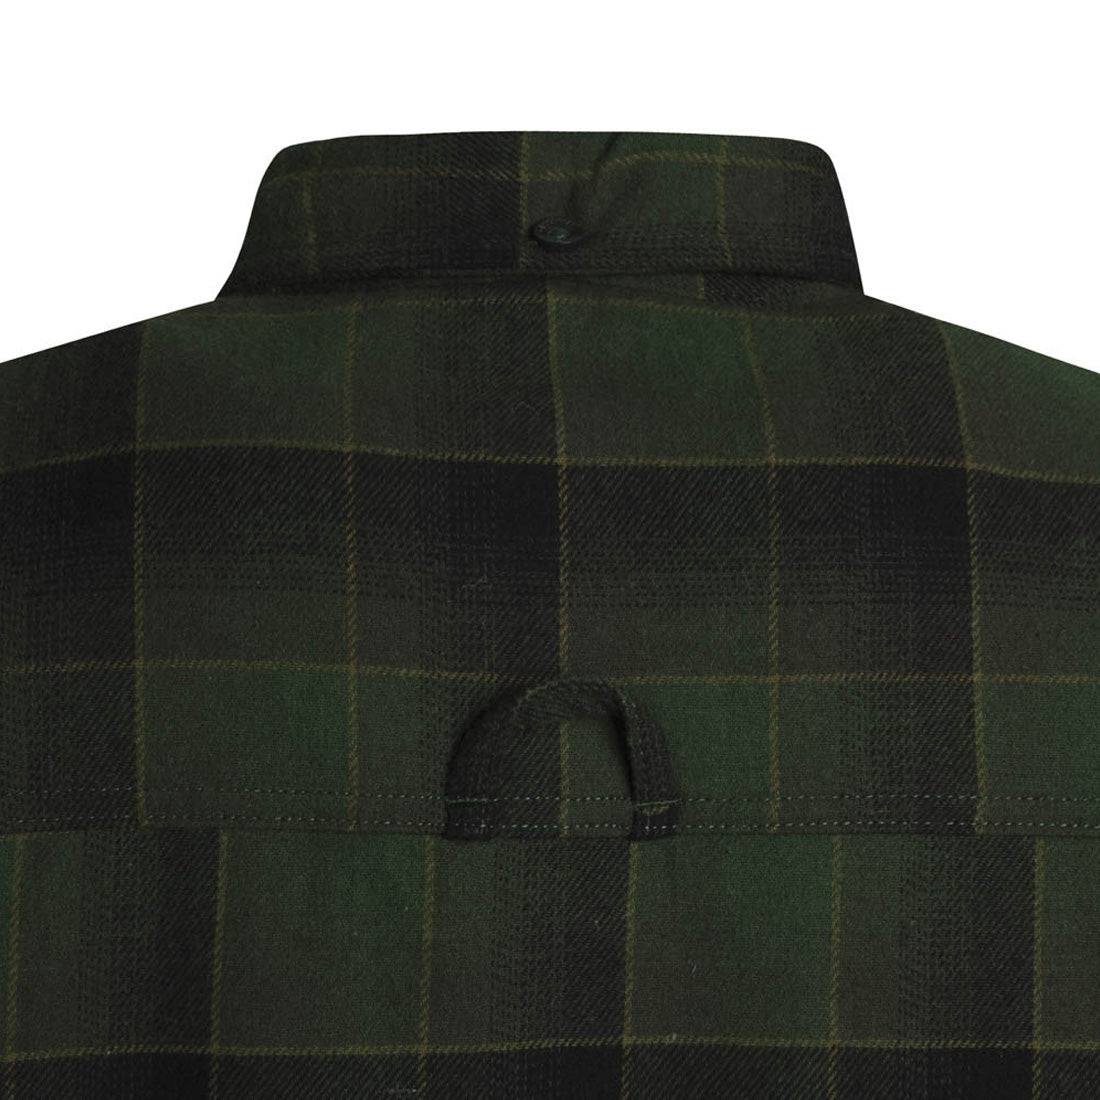 Garphyttan Crafter Insulated Shirt Green | The Sporting Lodge